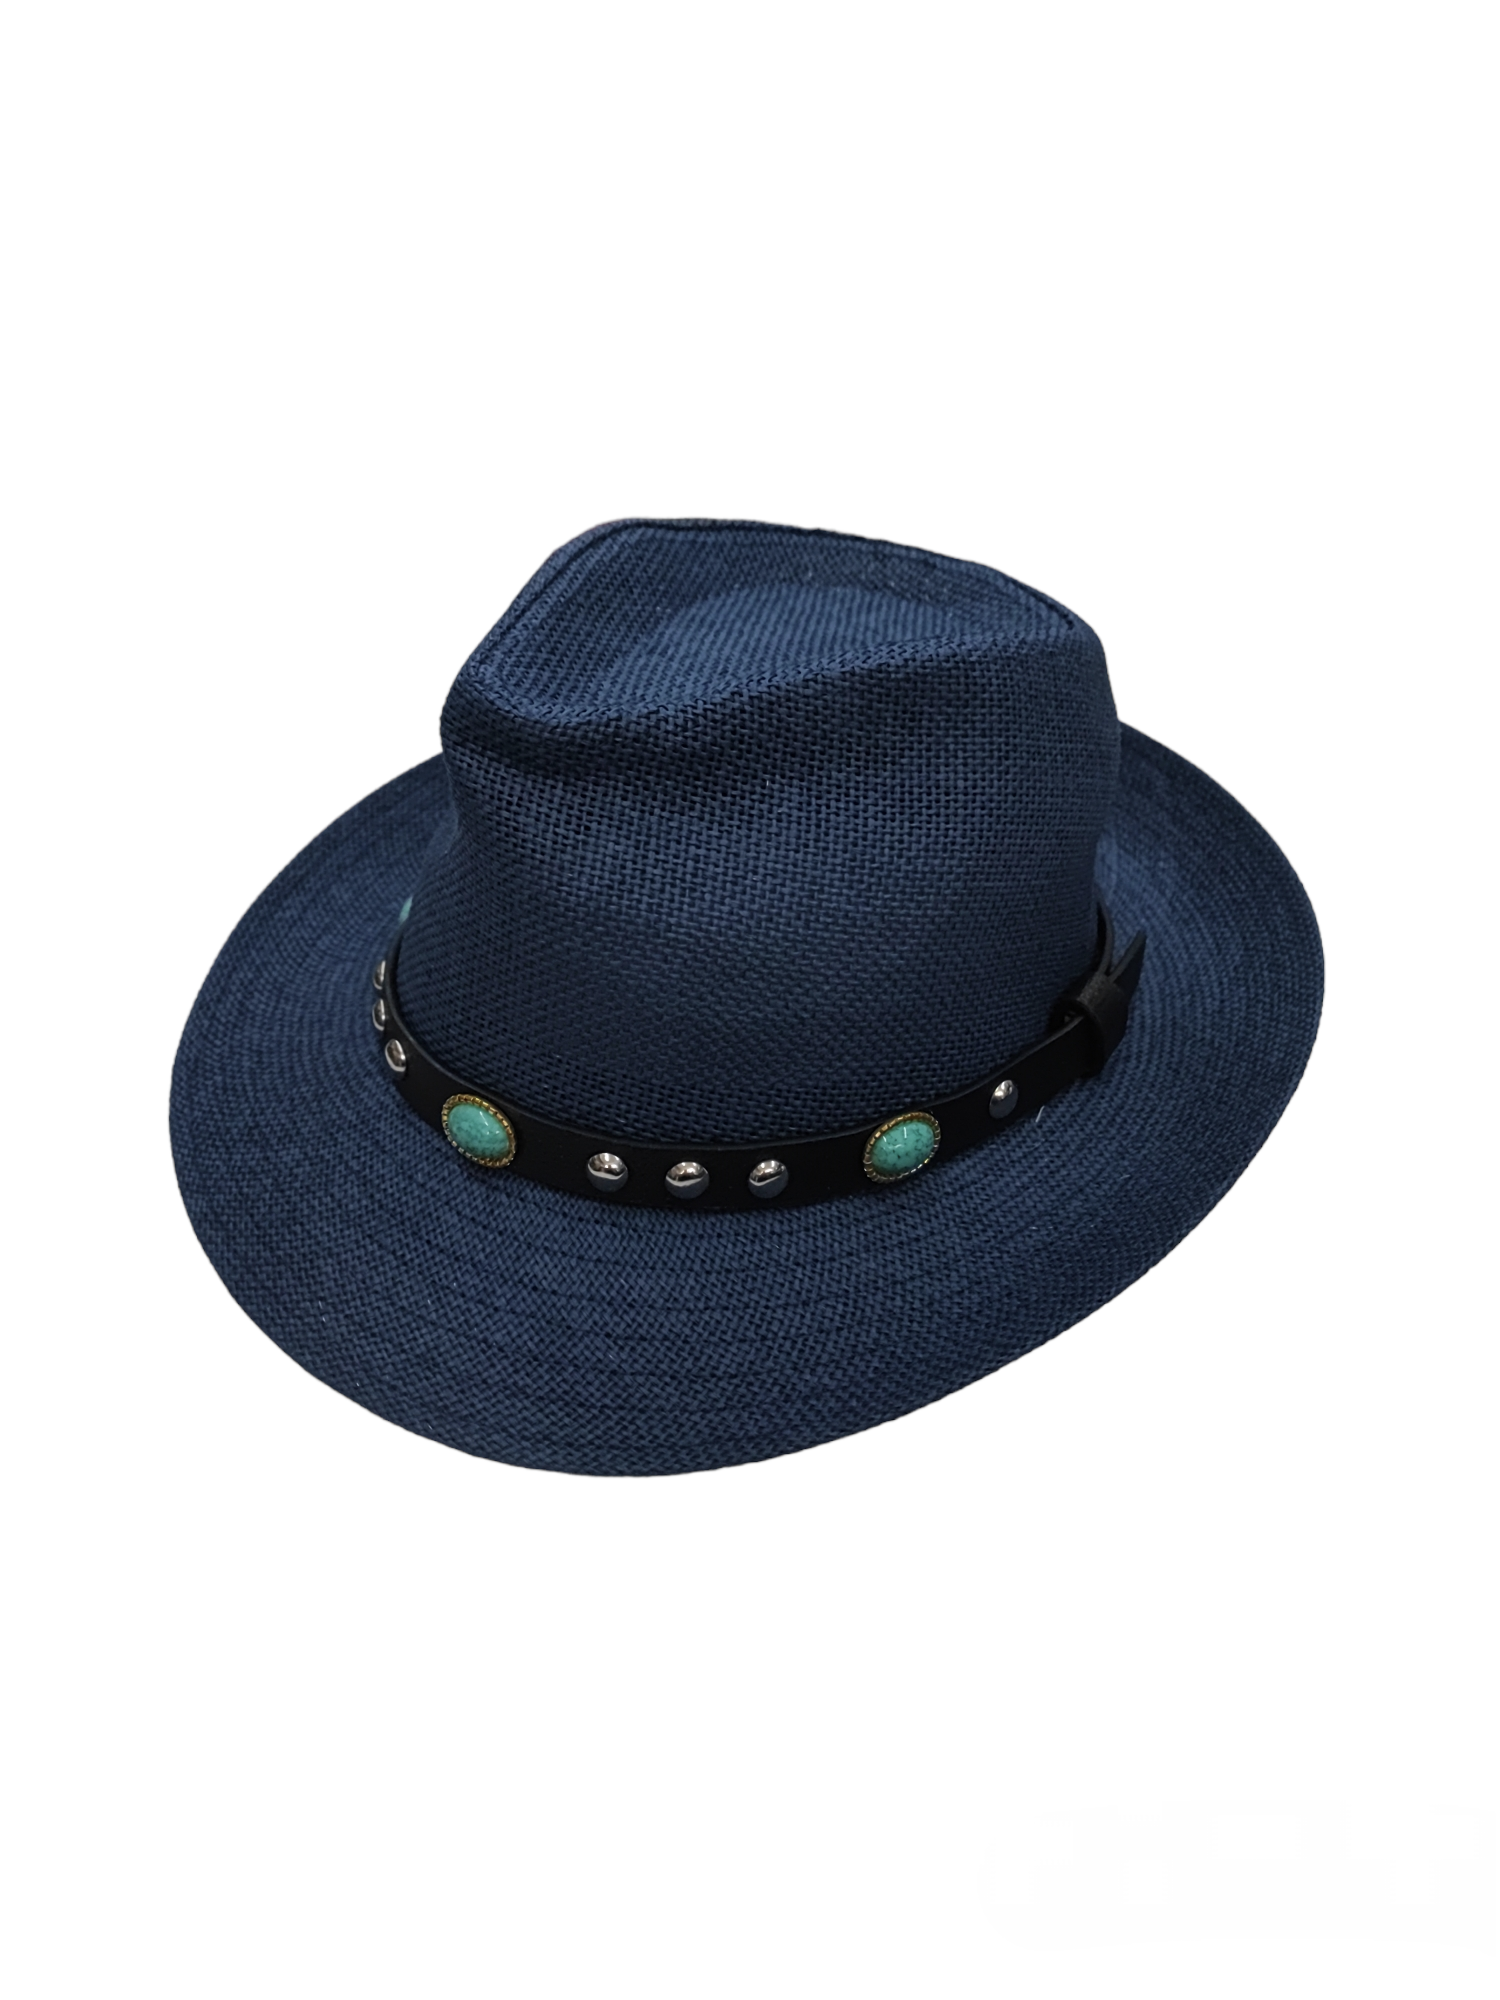 Straw cowboy hat with belt (x4)